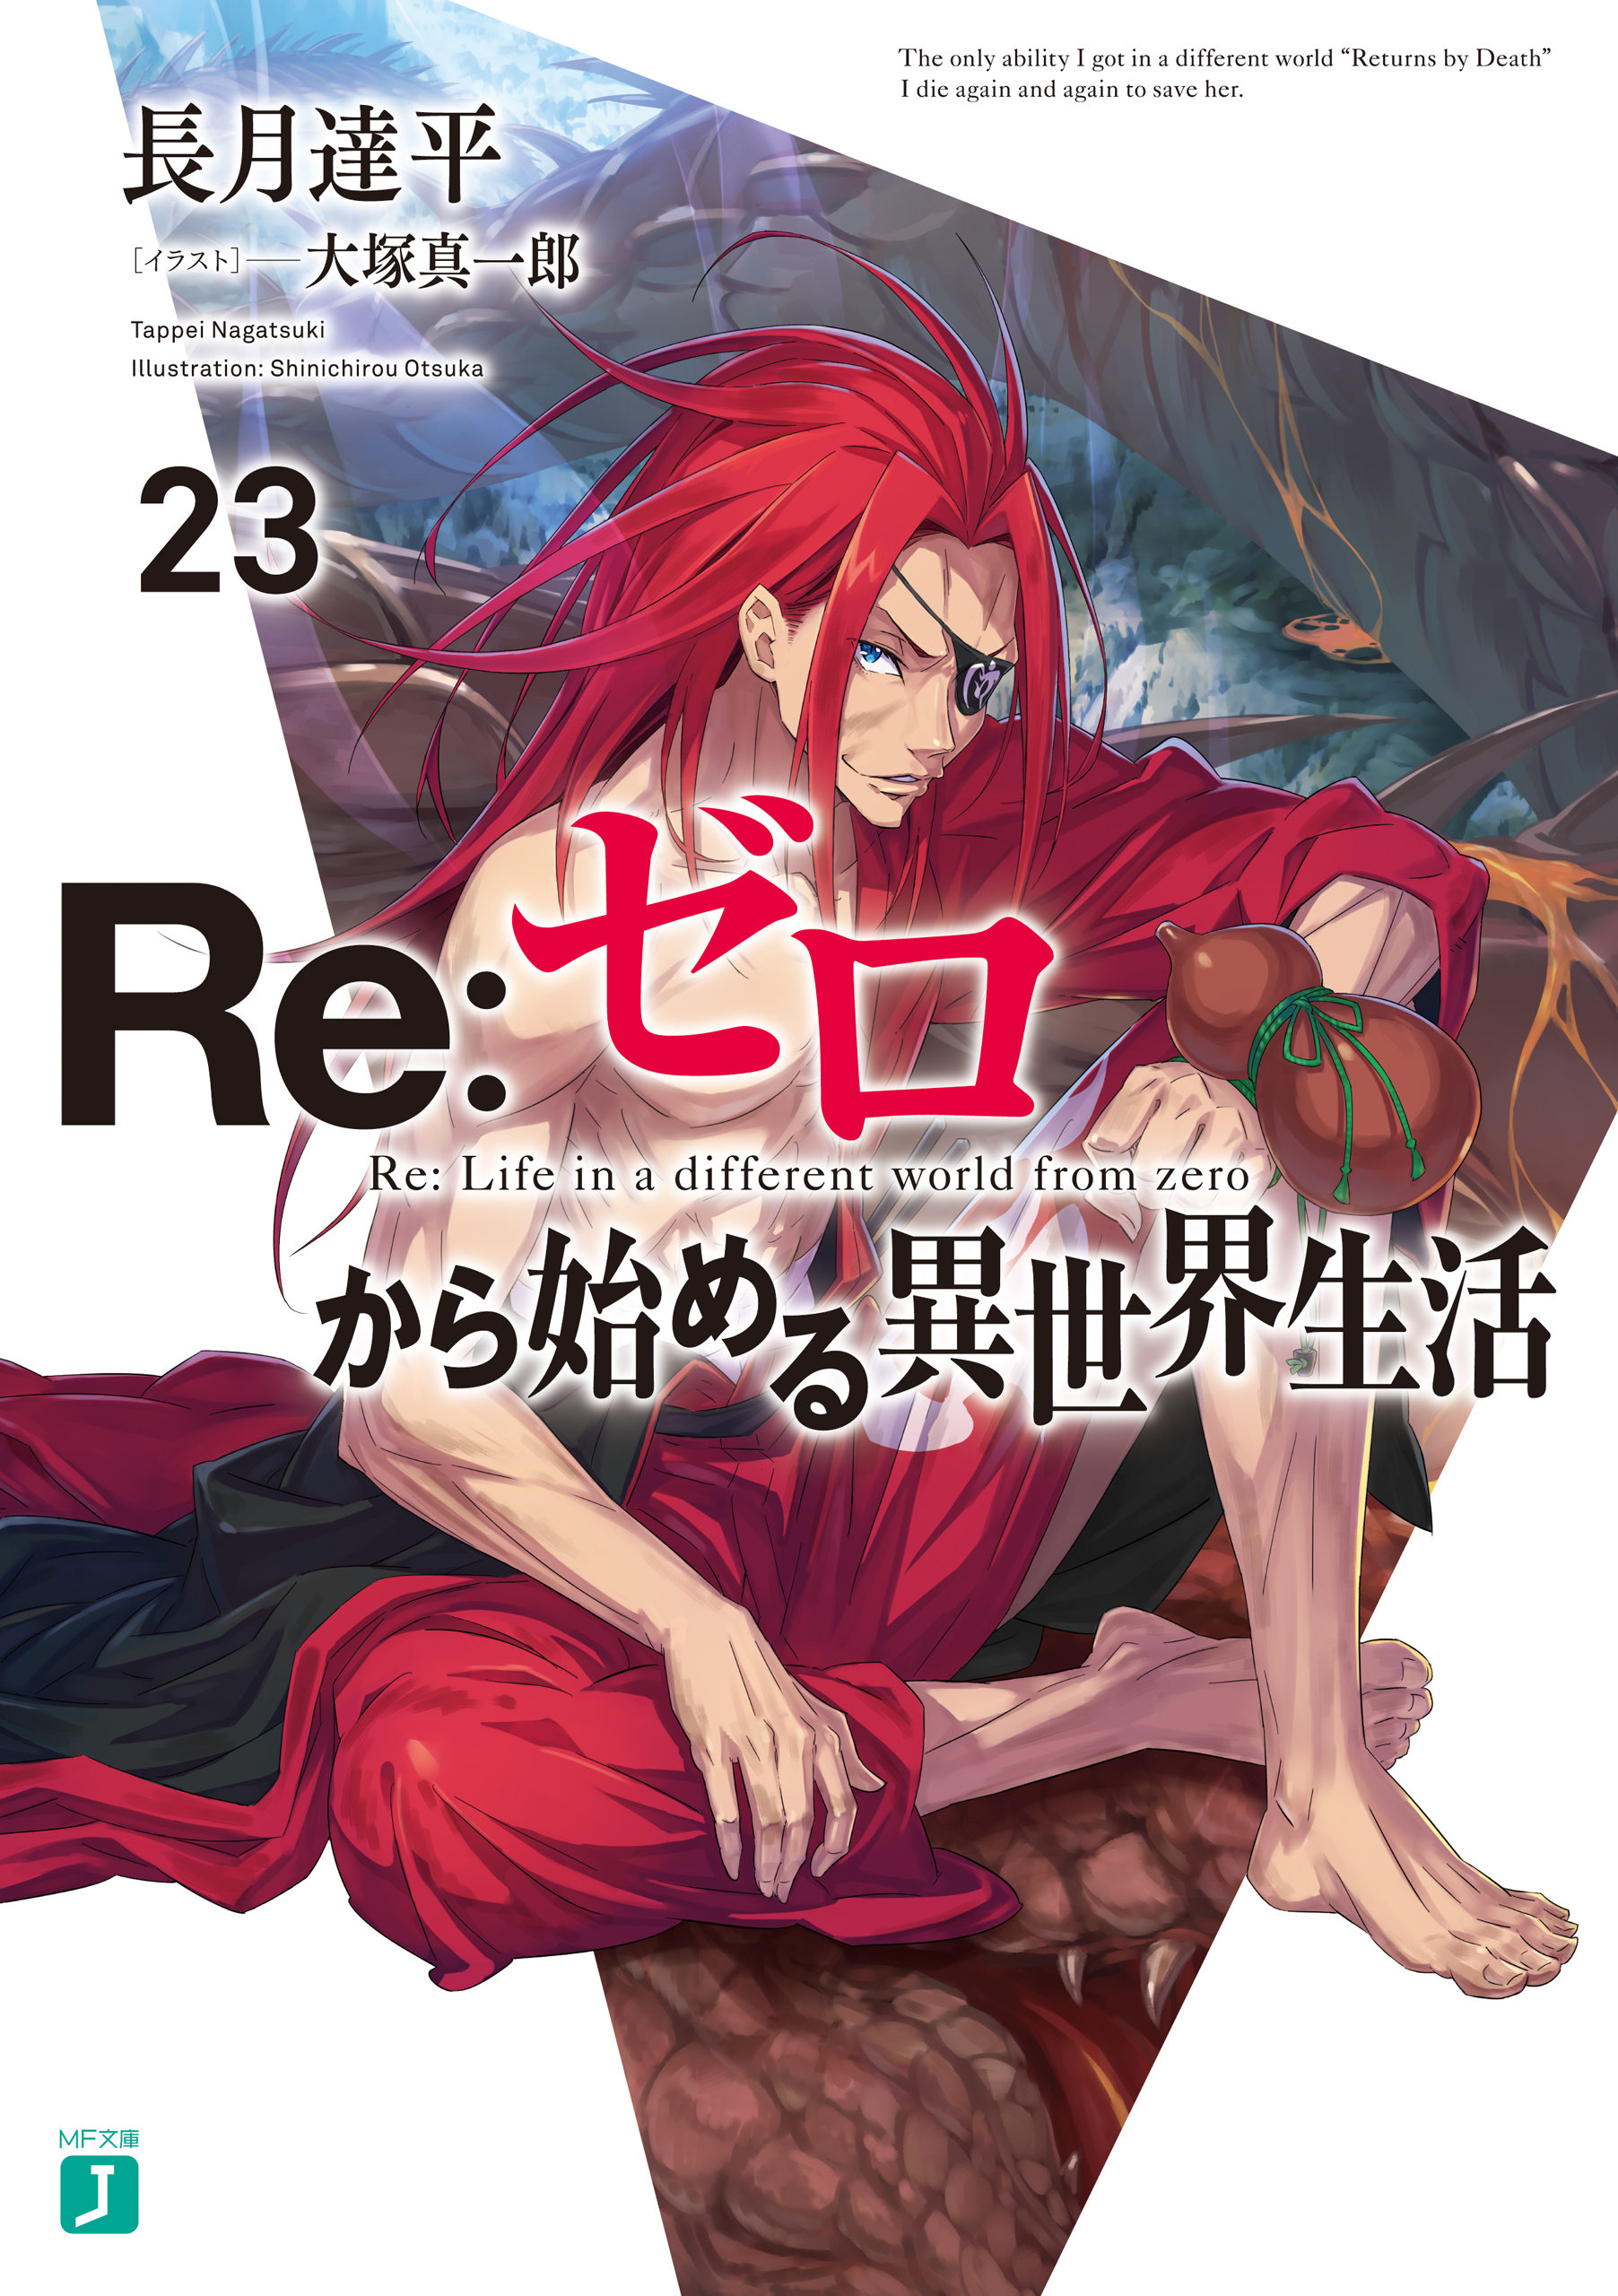 re:Zero Anime Manga Season 2 Poster A3 A4 5x7 Satin Matt Gloss